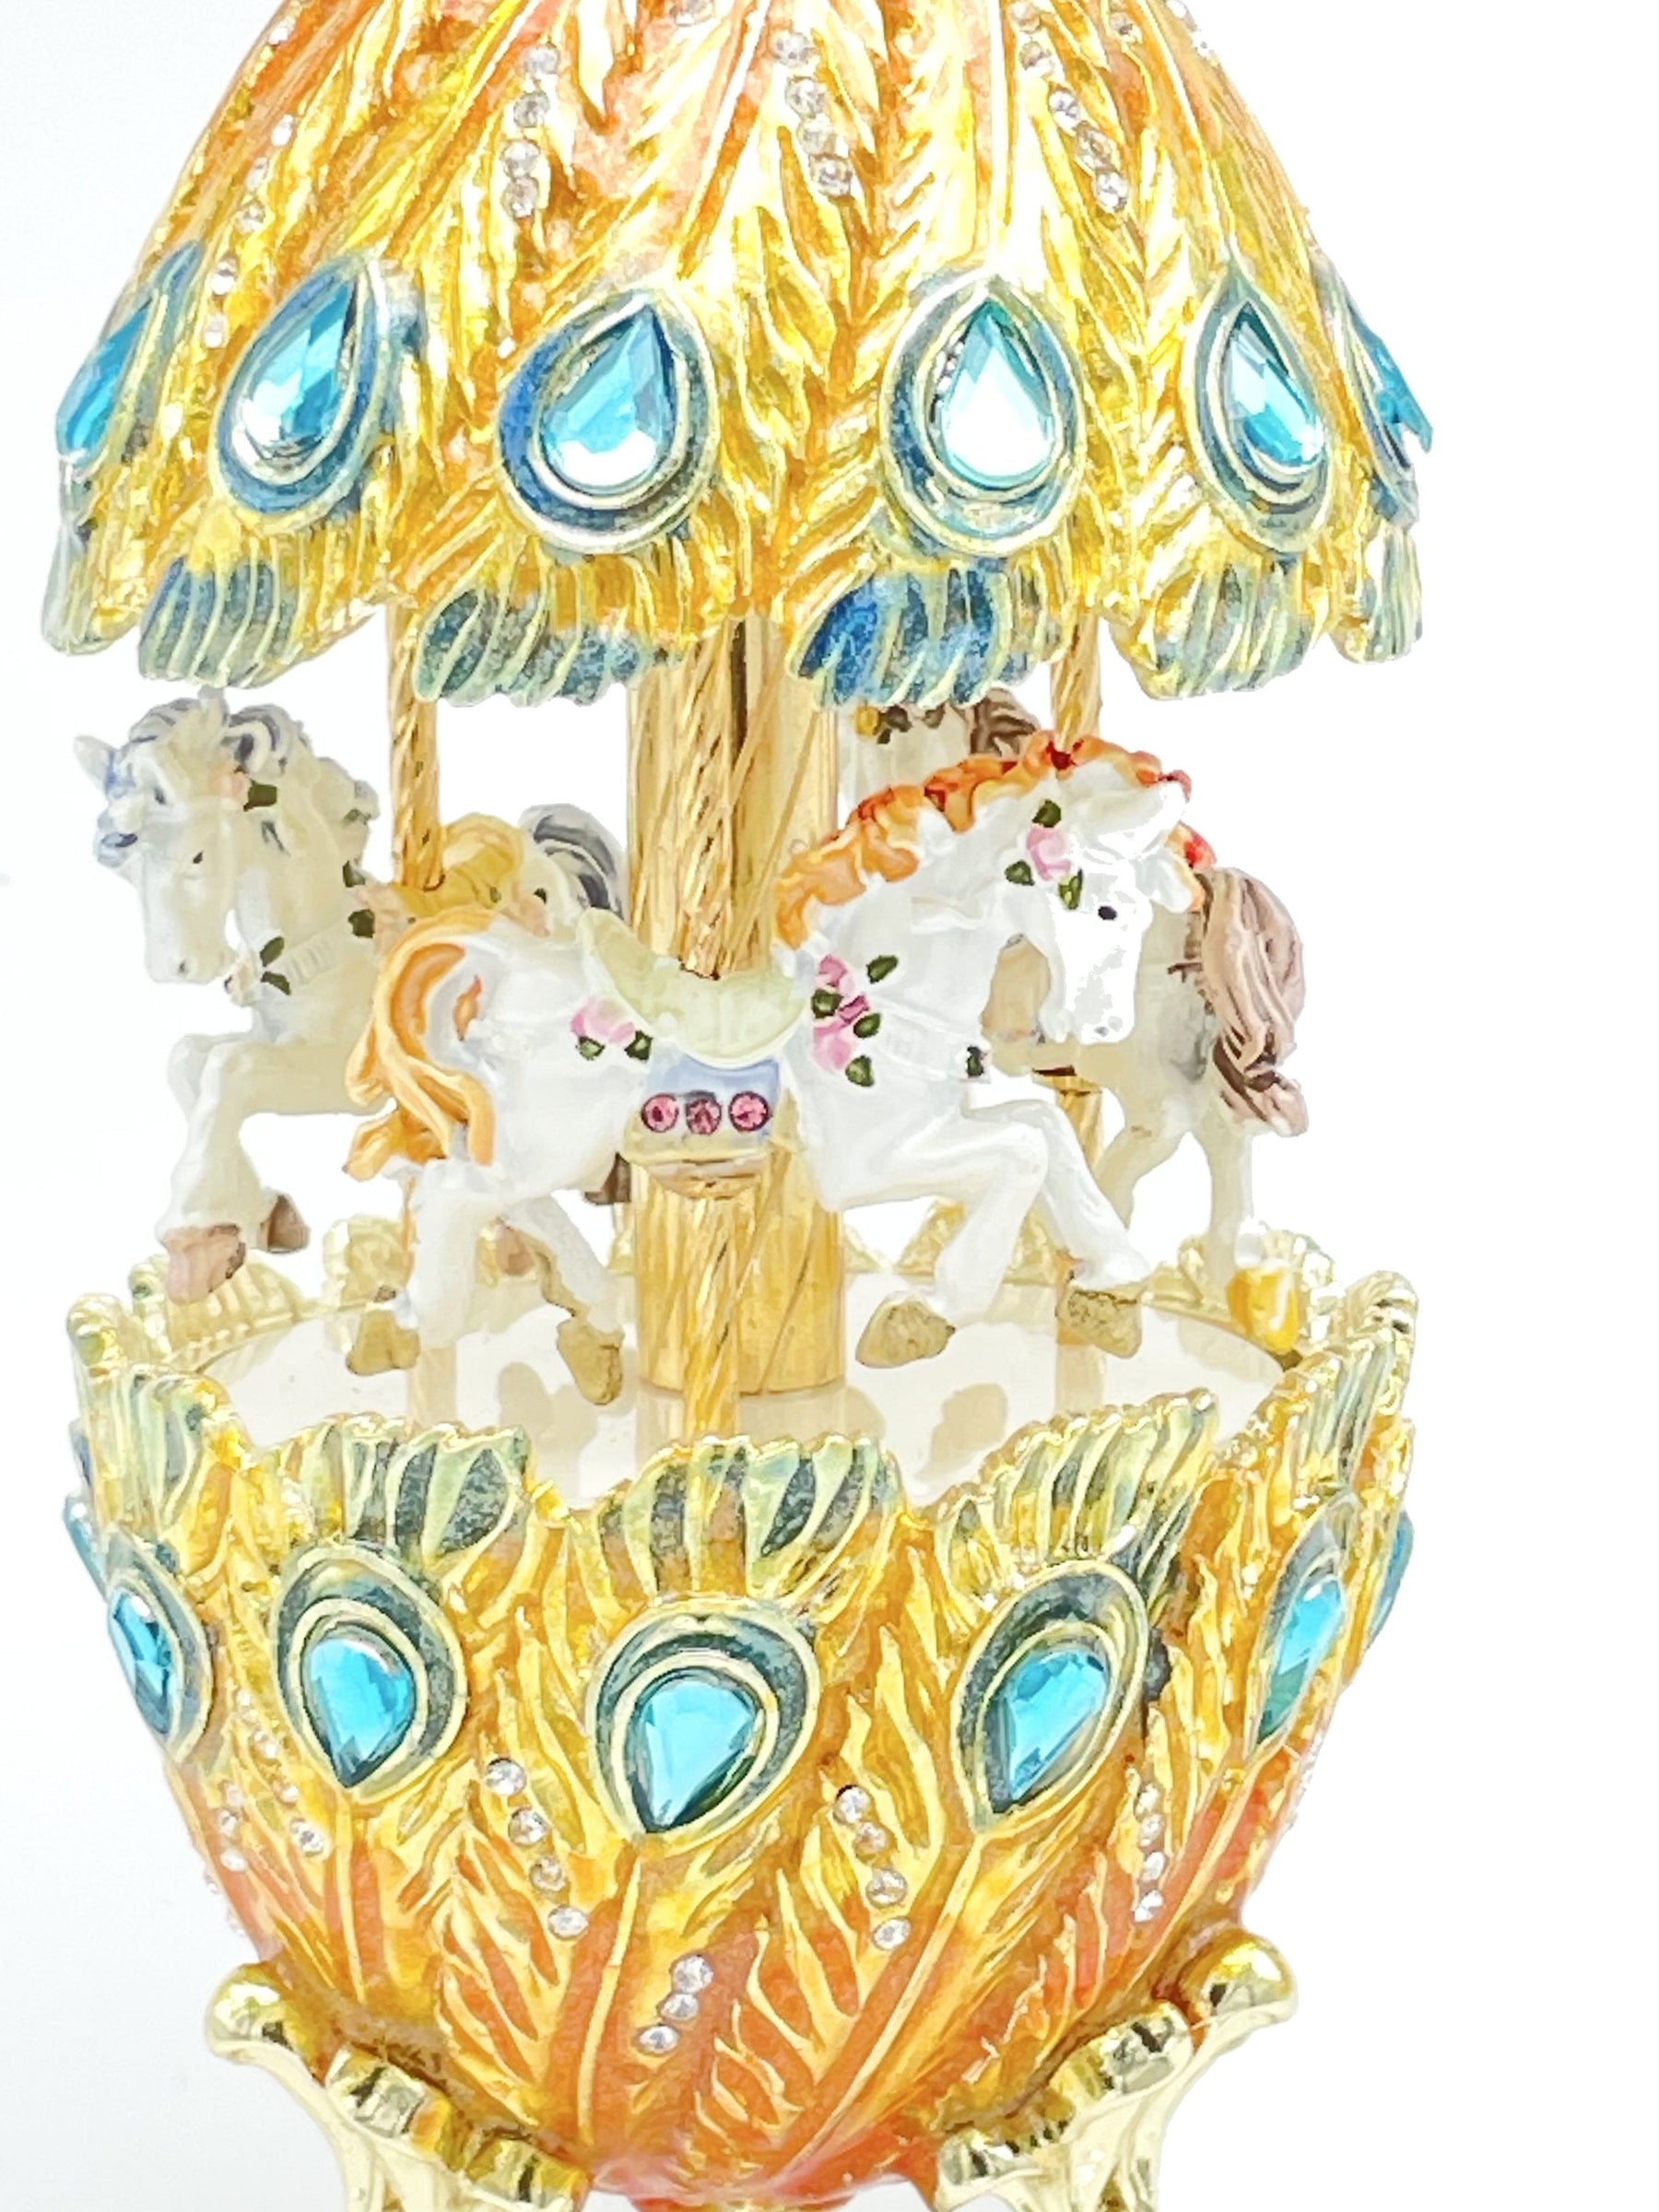 Colorful Musical Carousel with Royal Horses Easter Egg Keren Kopal